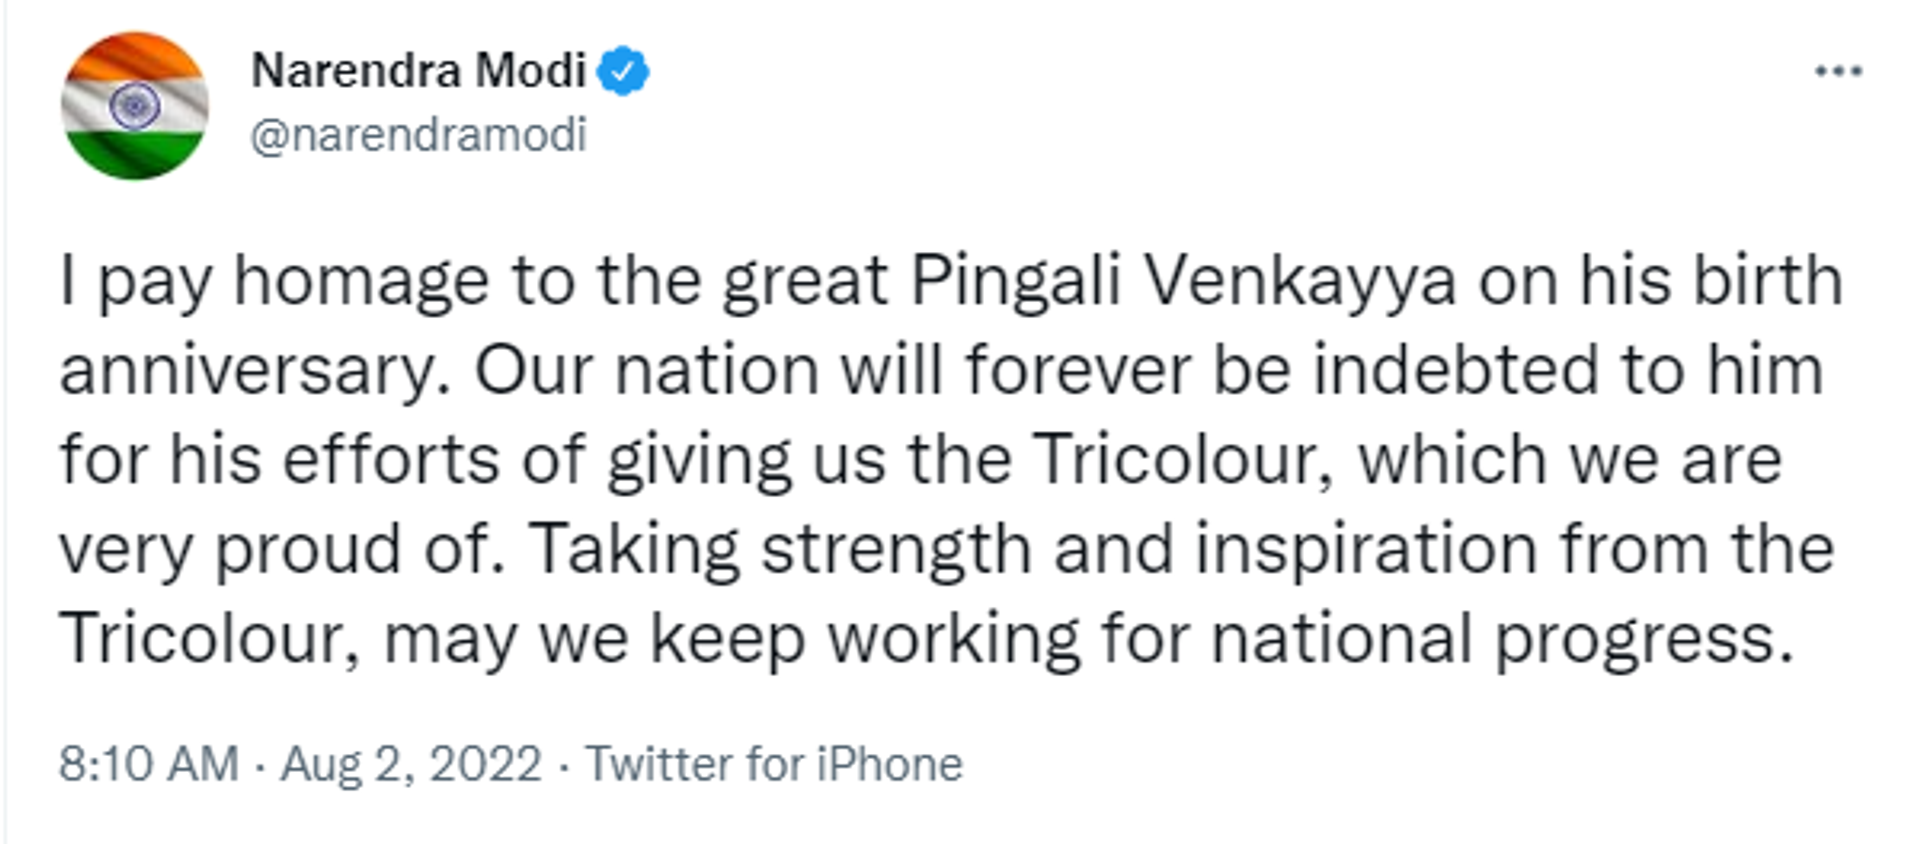 Narendra Modi Pays Tribute to Pingali Venkayya - Sputnik International, 1920, 02.08.2022